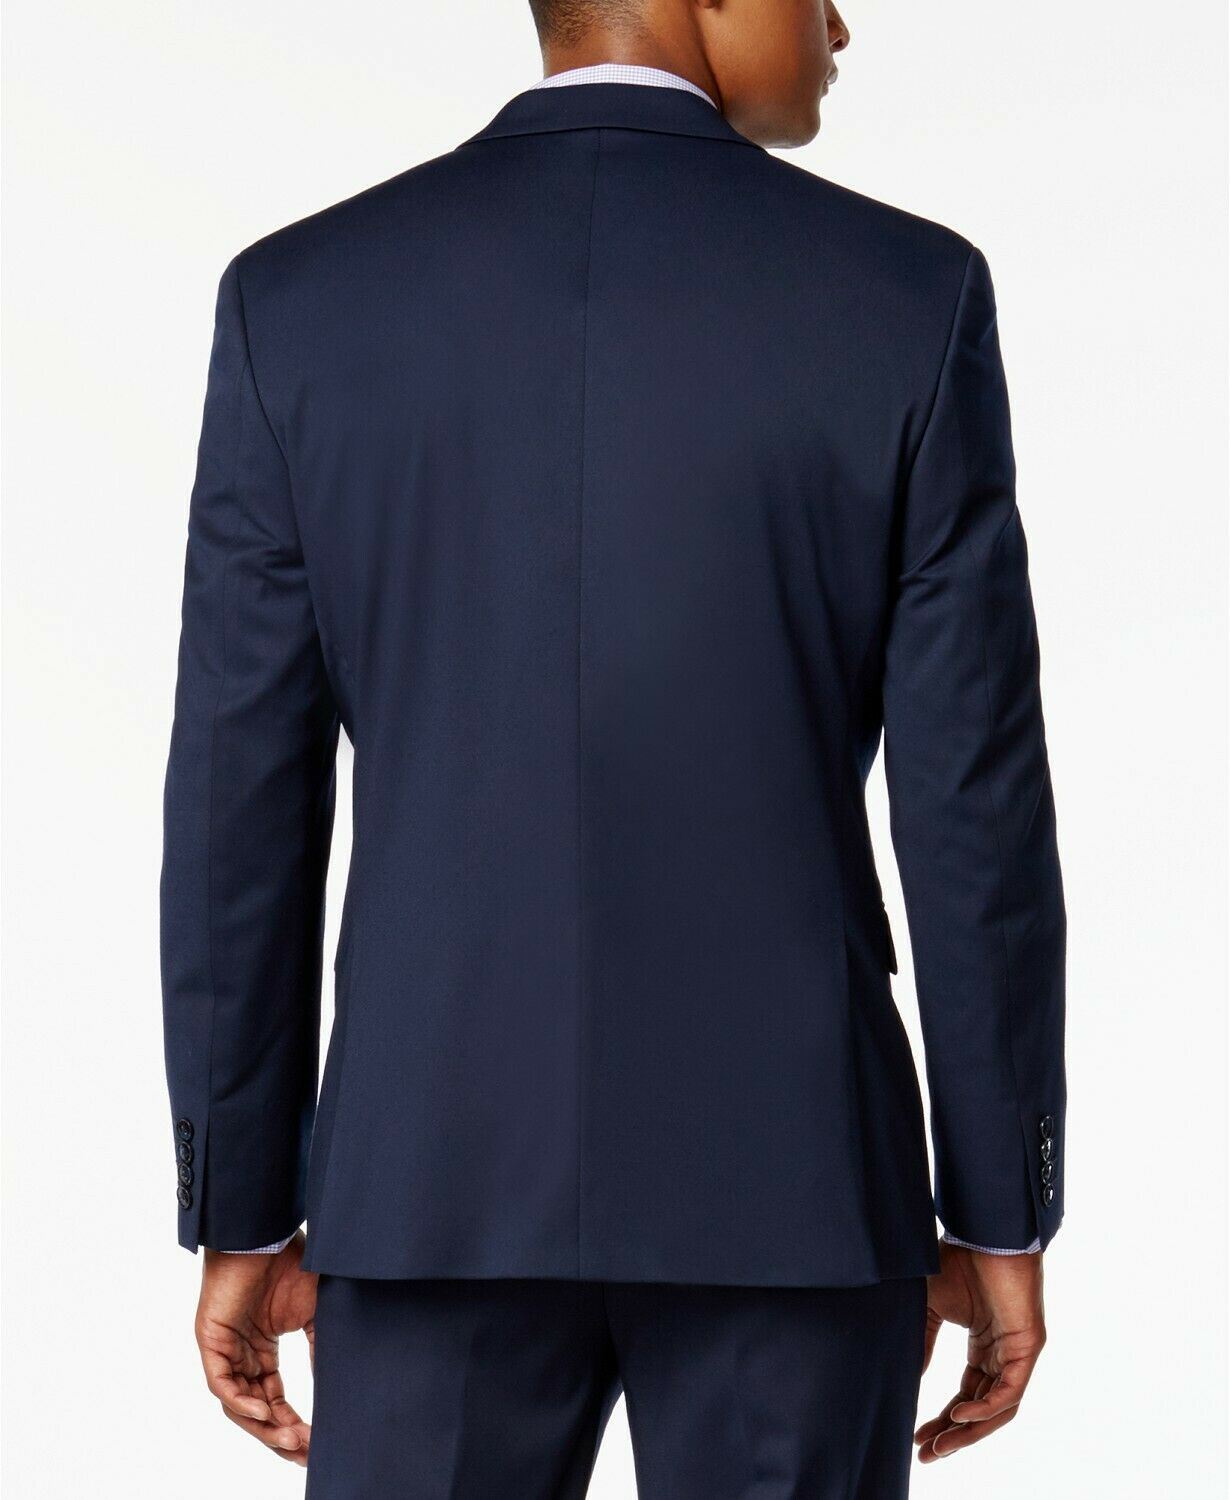 Alfani Men's Stretch Performance Slim-Fit Jacket 42S Navy Blue